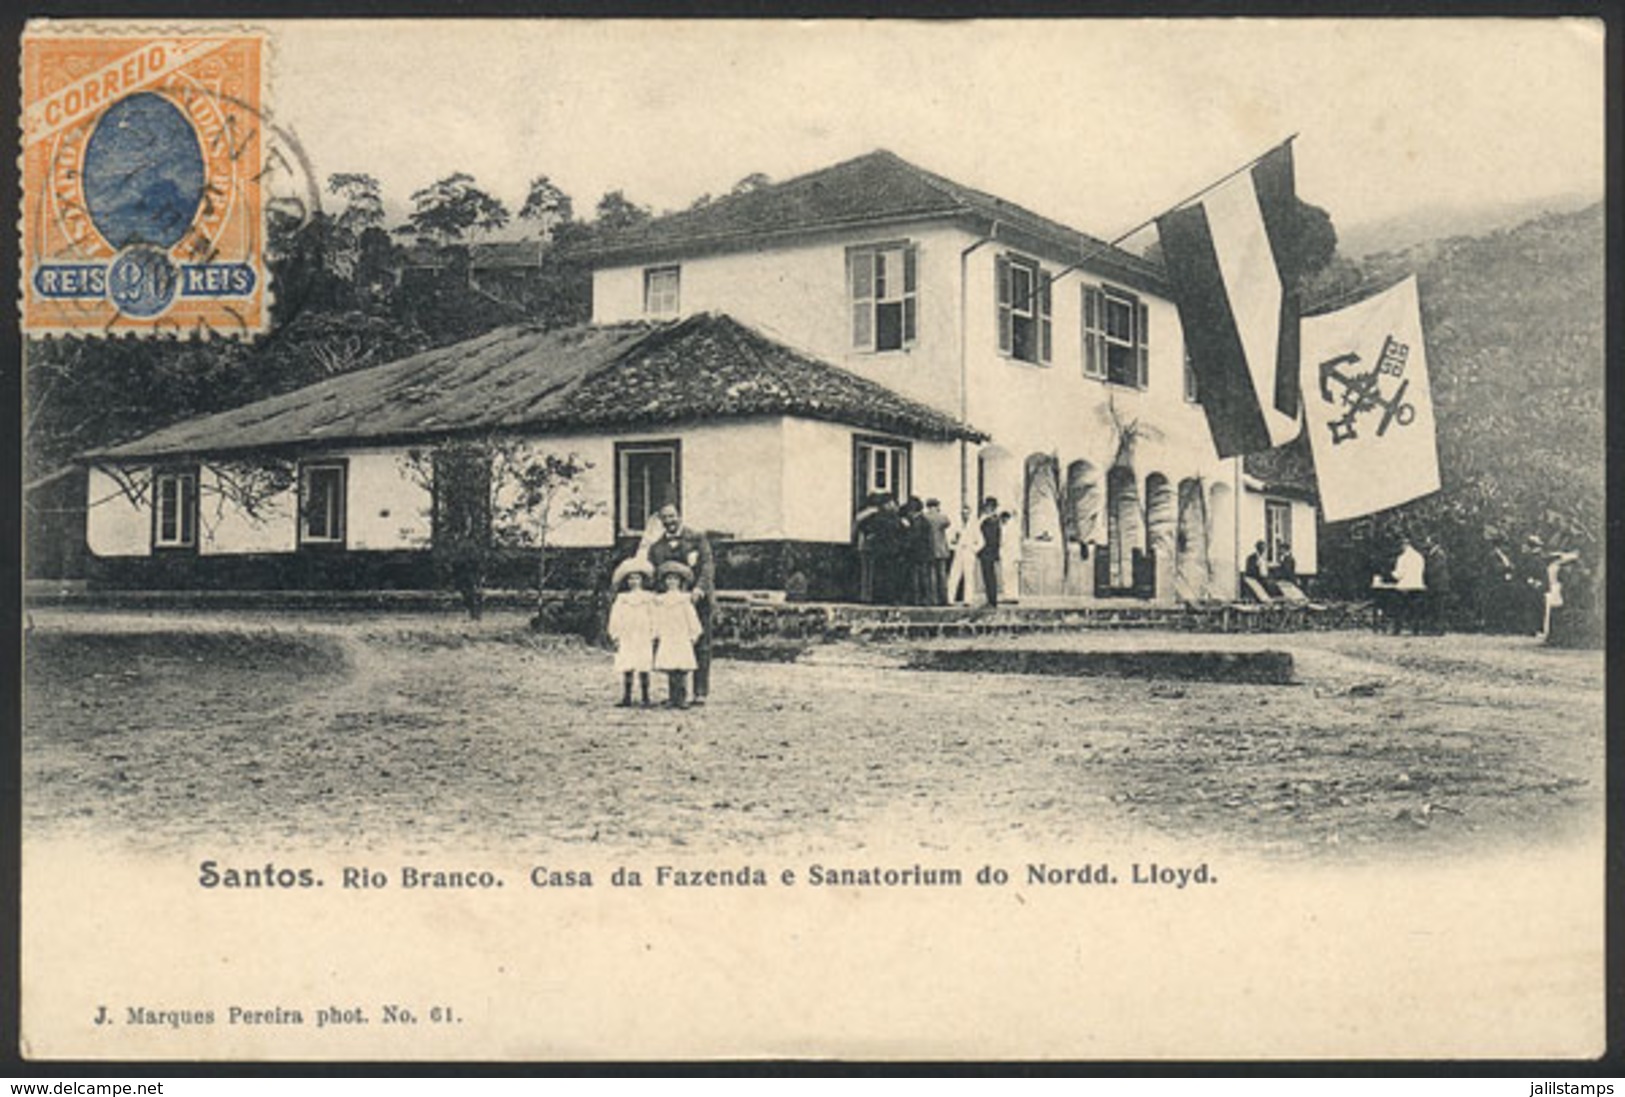 BRAZIL: SANTOS: Fazenda House And Sanatorium Of Nordd. Lloyd, Rio Branco, Ed.Marques Pereira, Used On 5/JUN/1906, VF Qua - Rio De Janeiro